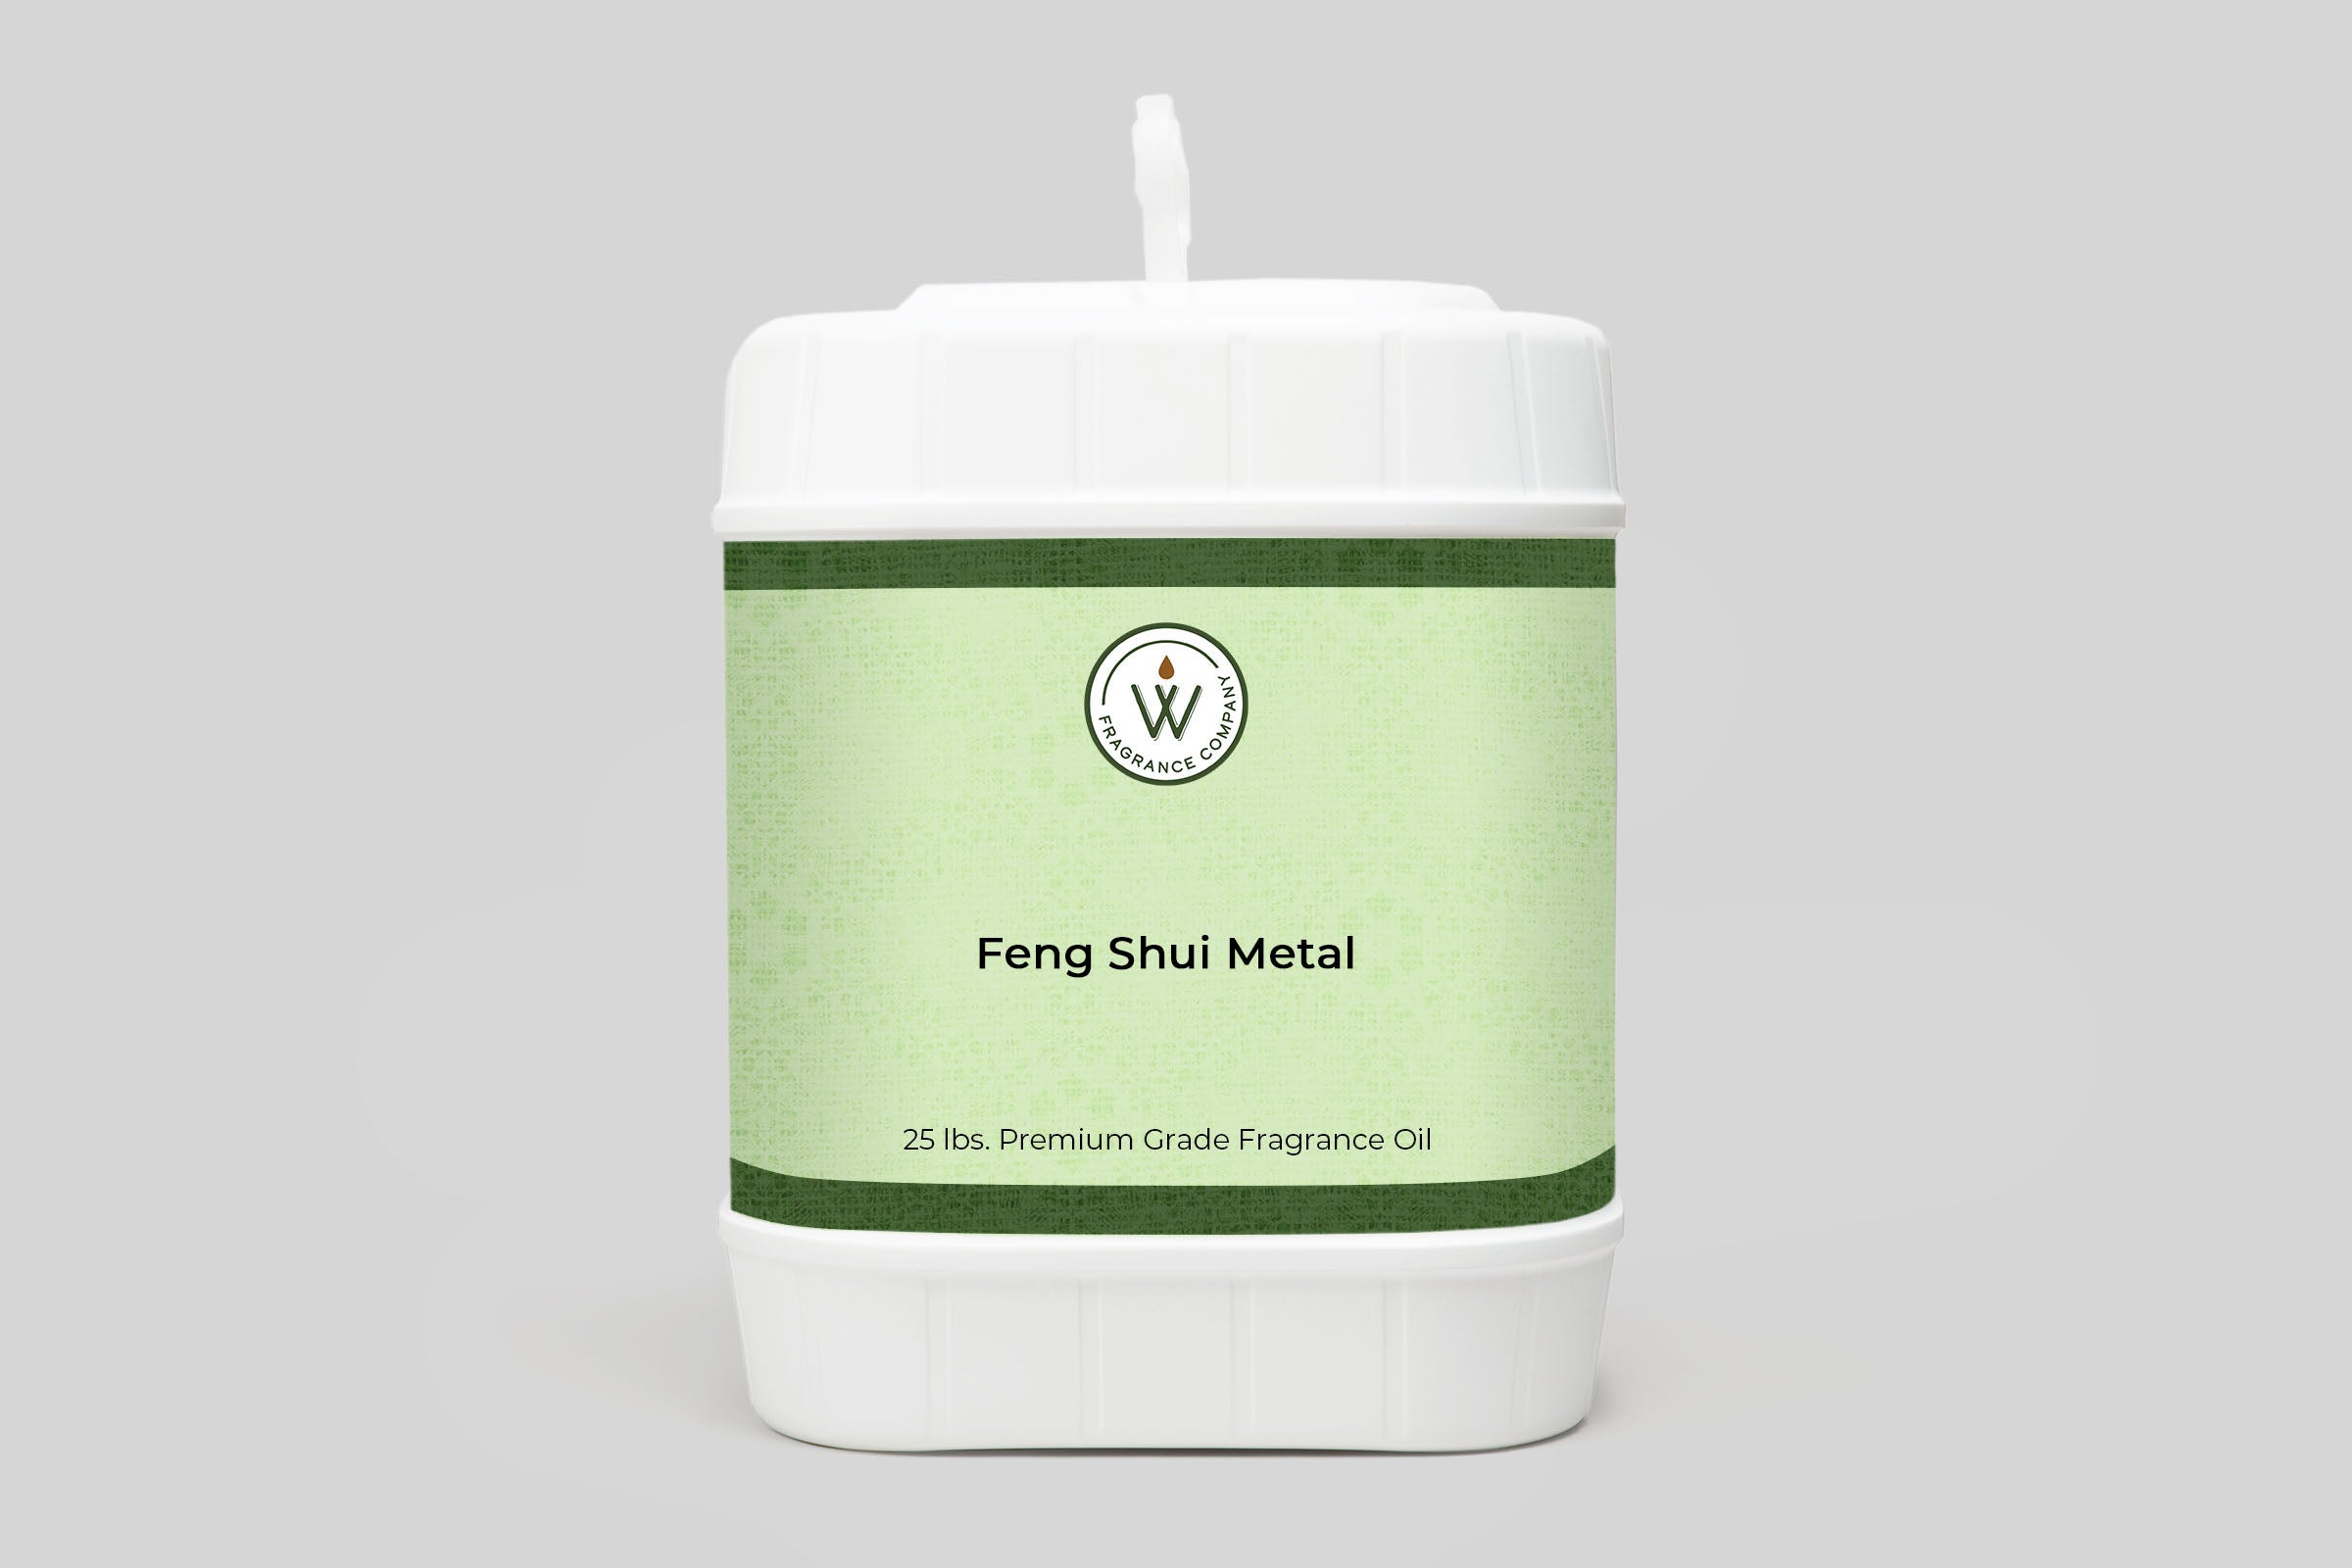 Feng Shui Metal Fragrance Oil